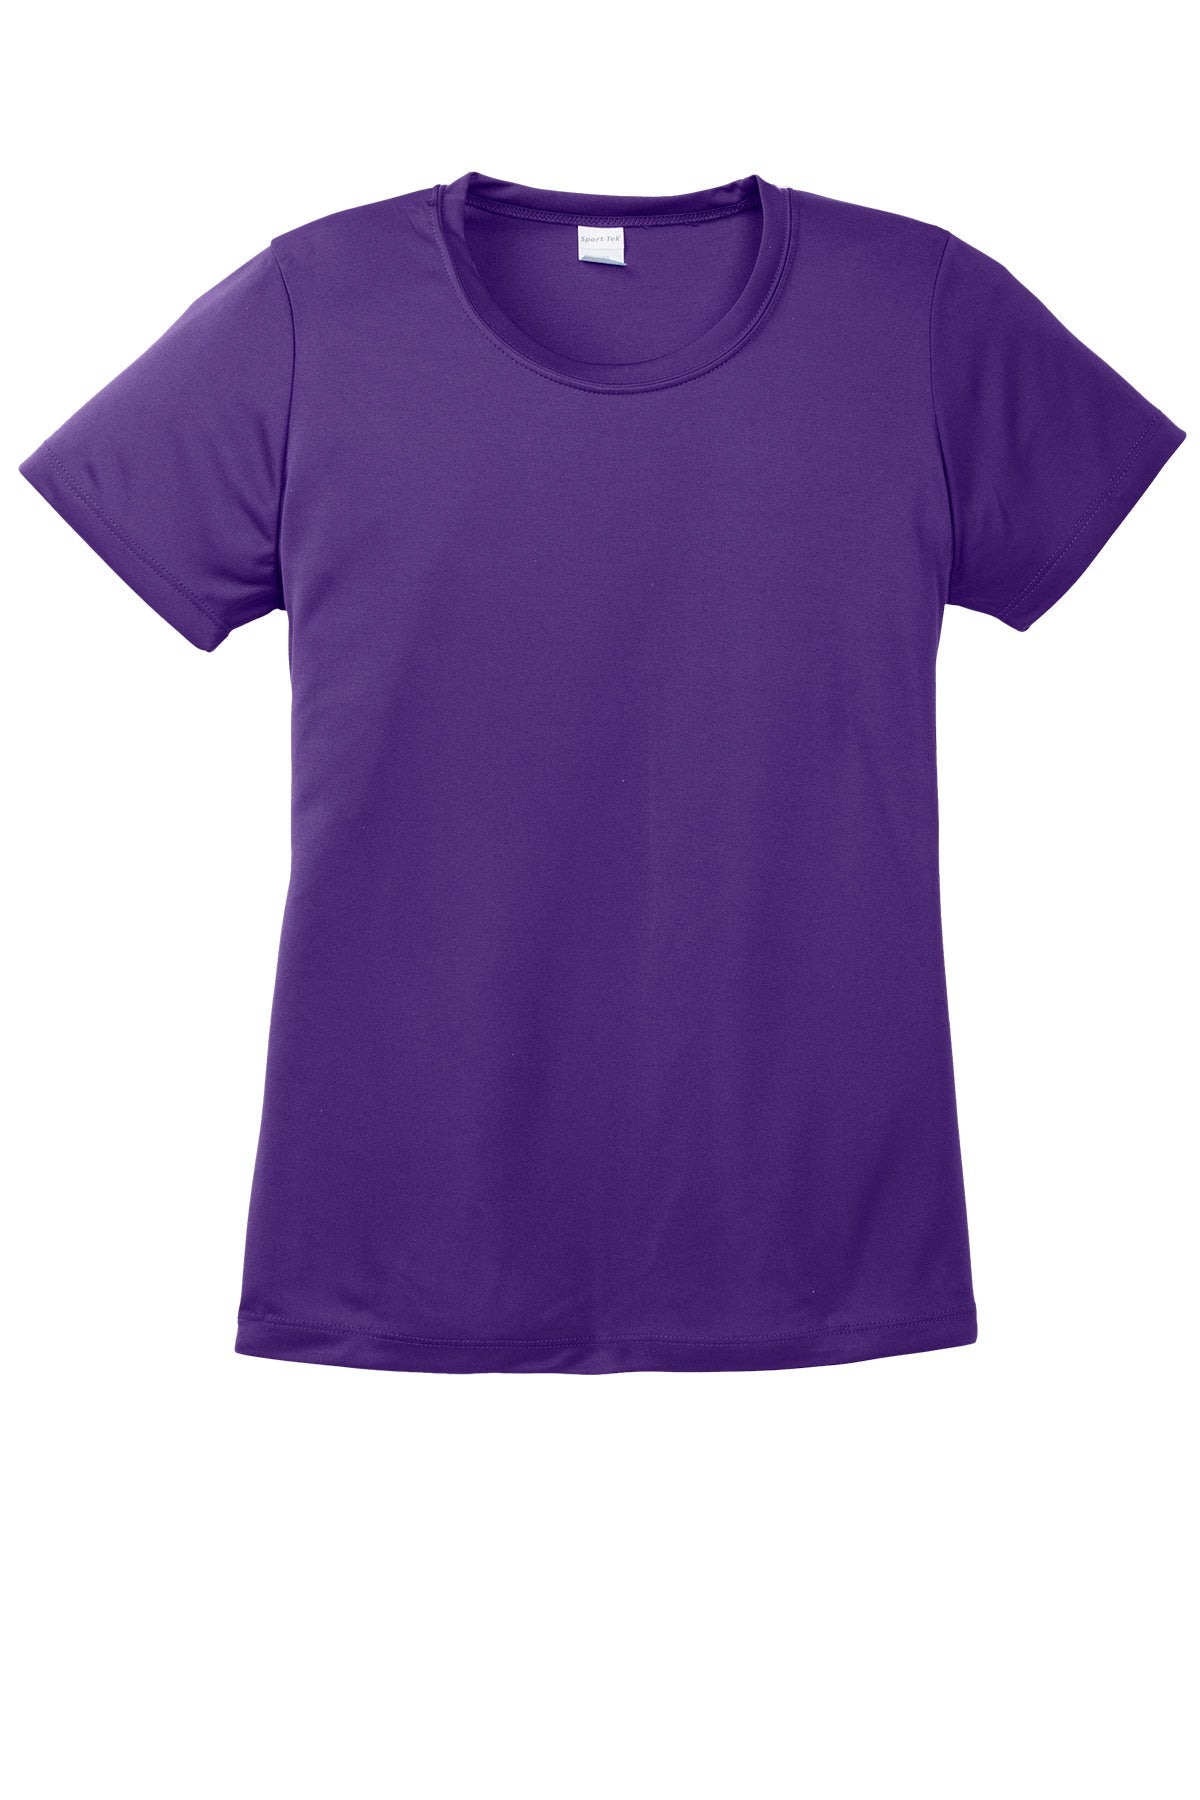 Sport-Tek Lst350 Polyester Ladies T-Shirt Ad Small / Purple